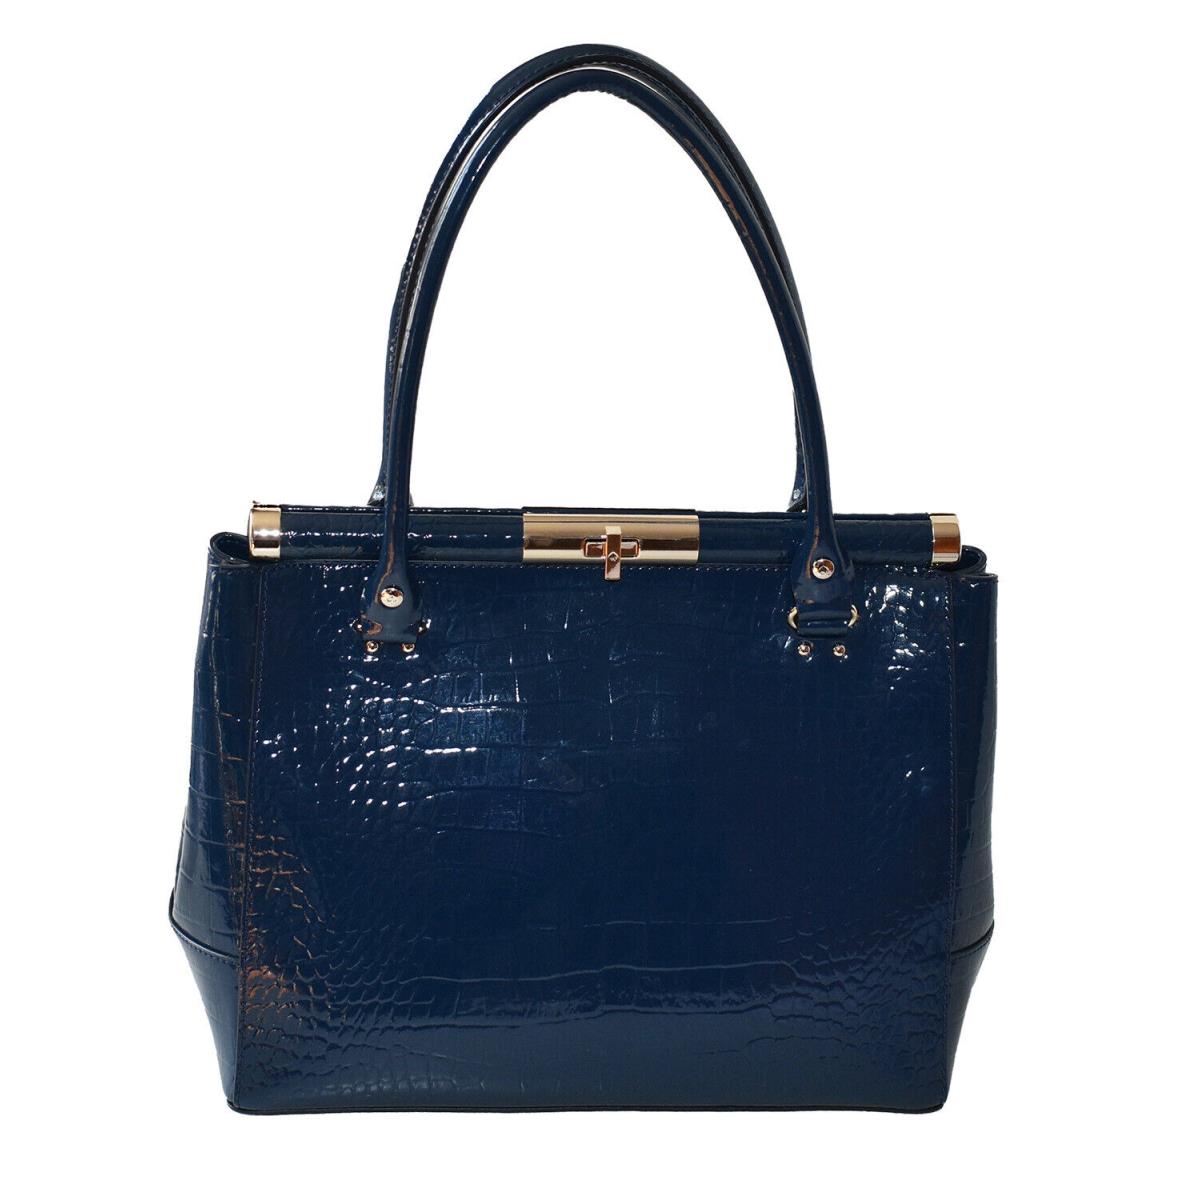 Kate Spade Women s Handbag Knightsbridge Constance Leather Satchel Petroblue New